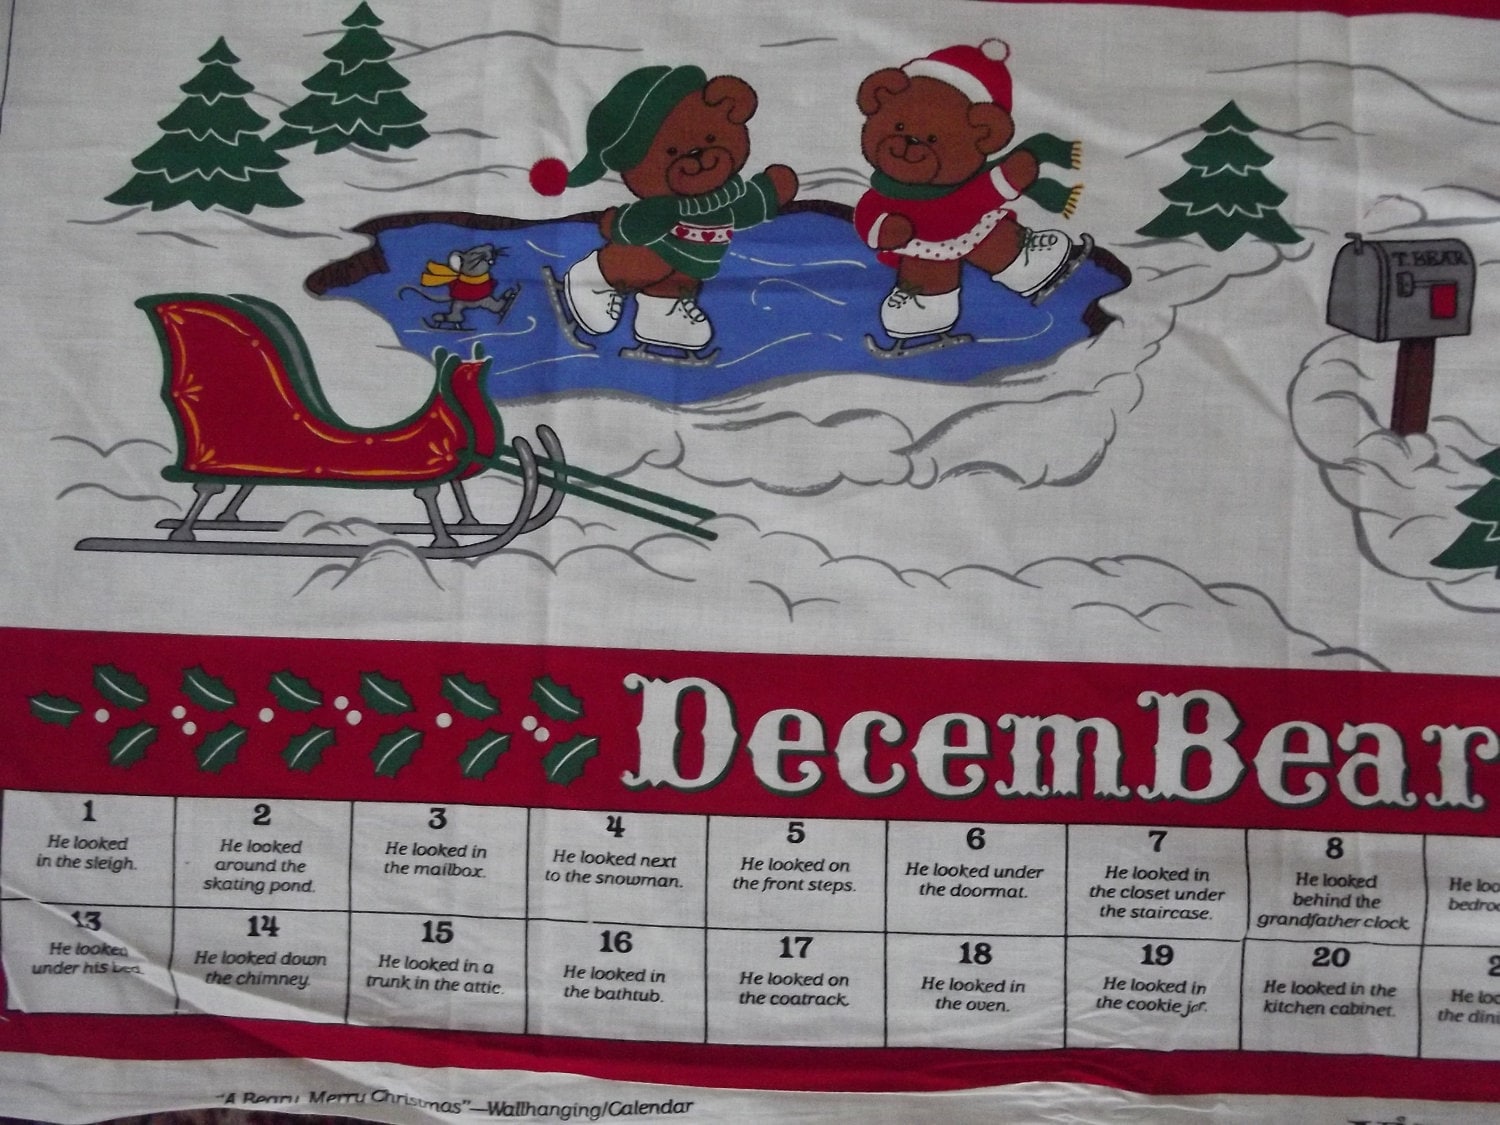 A Beary Merry Christmas Wallhanging Calendar Craft Fabric